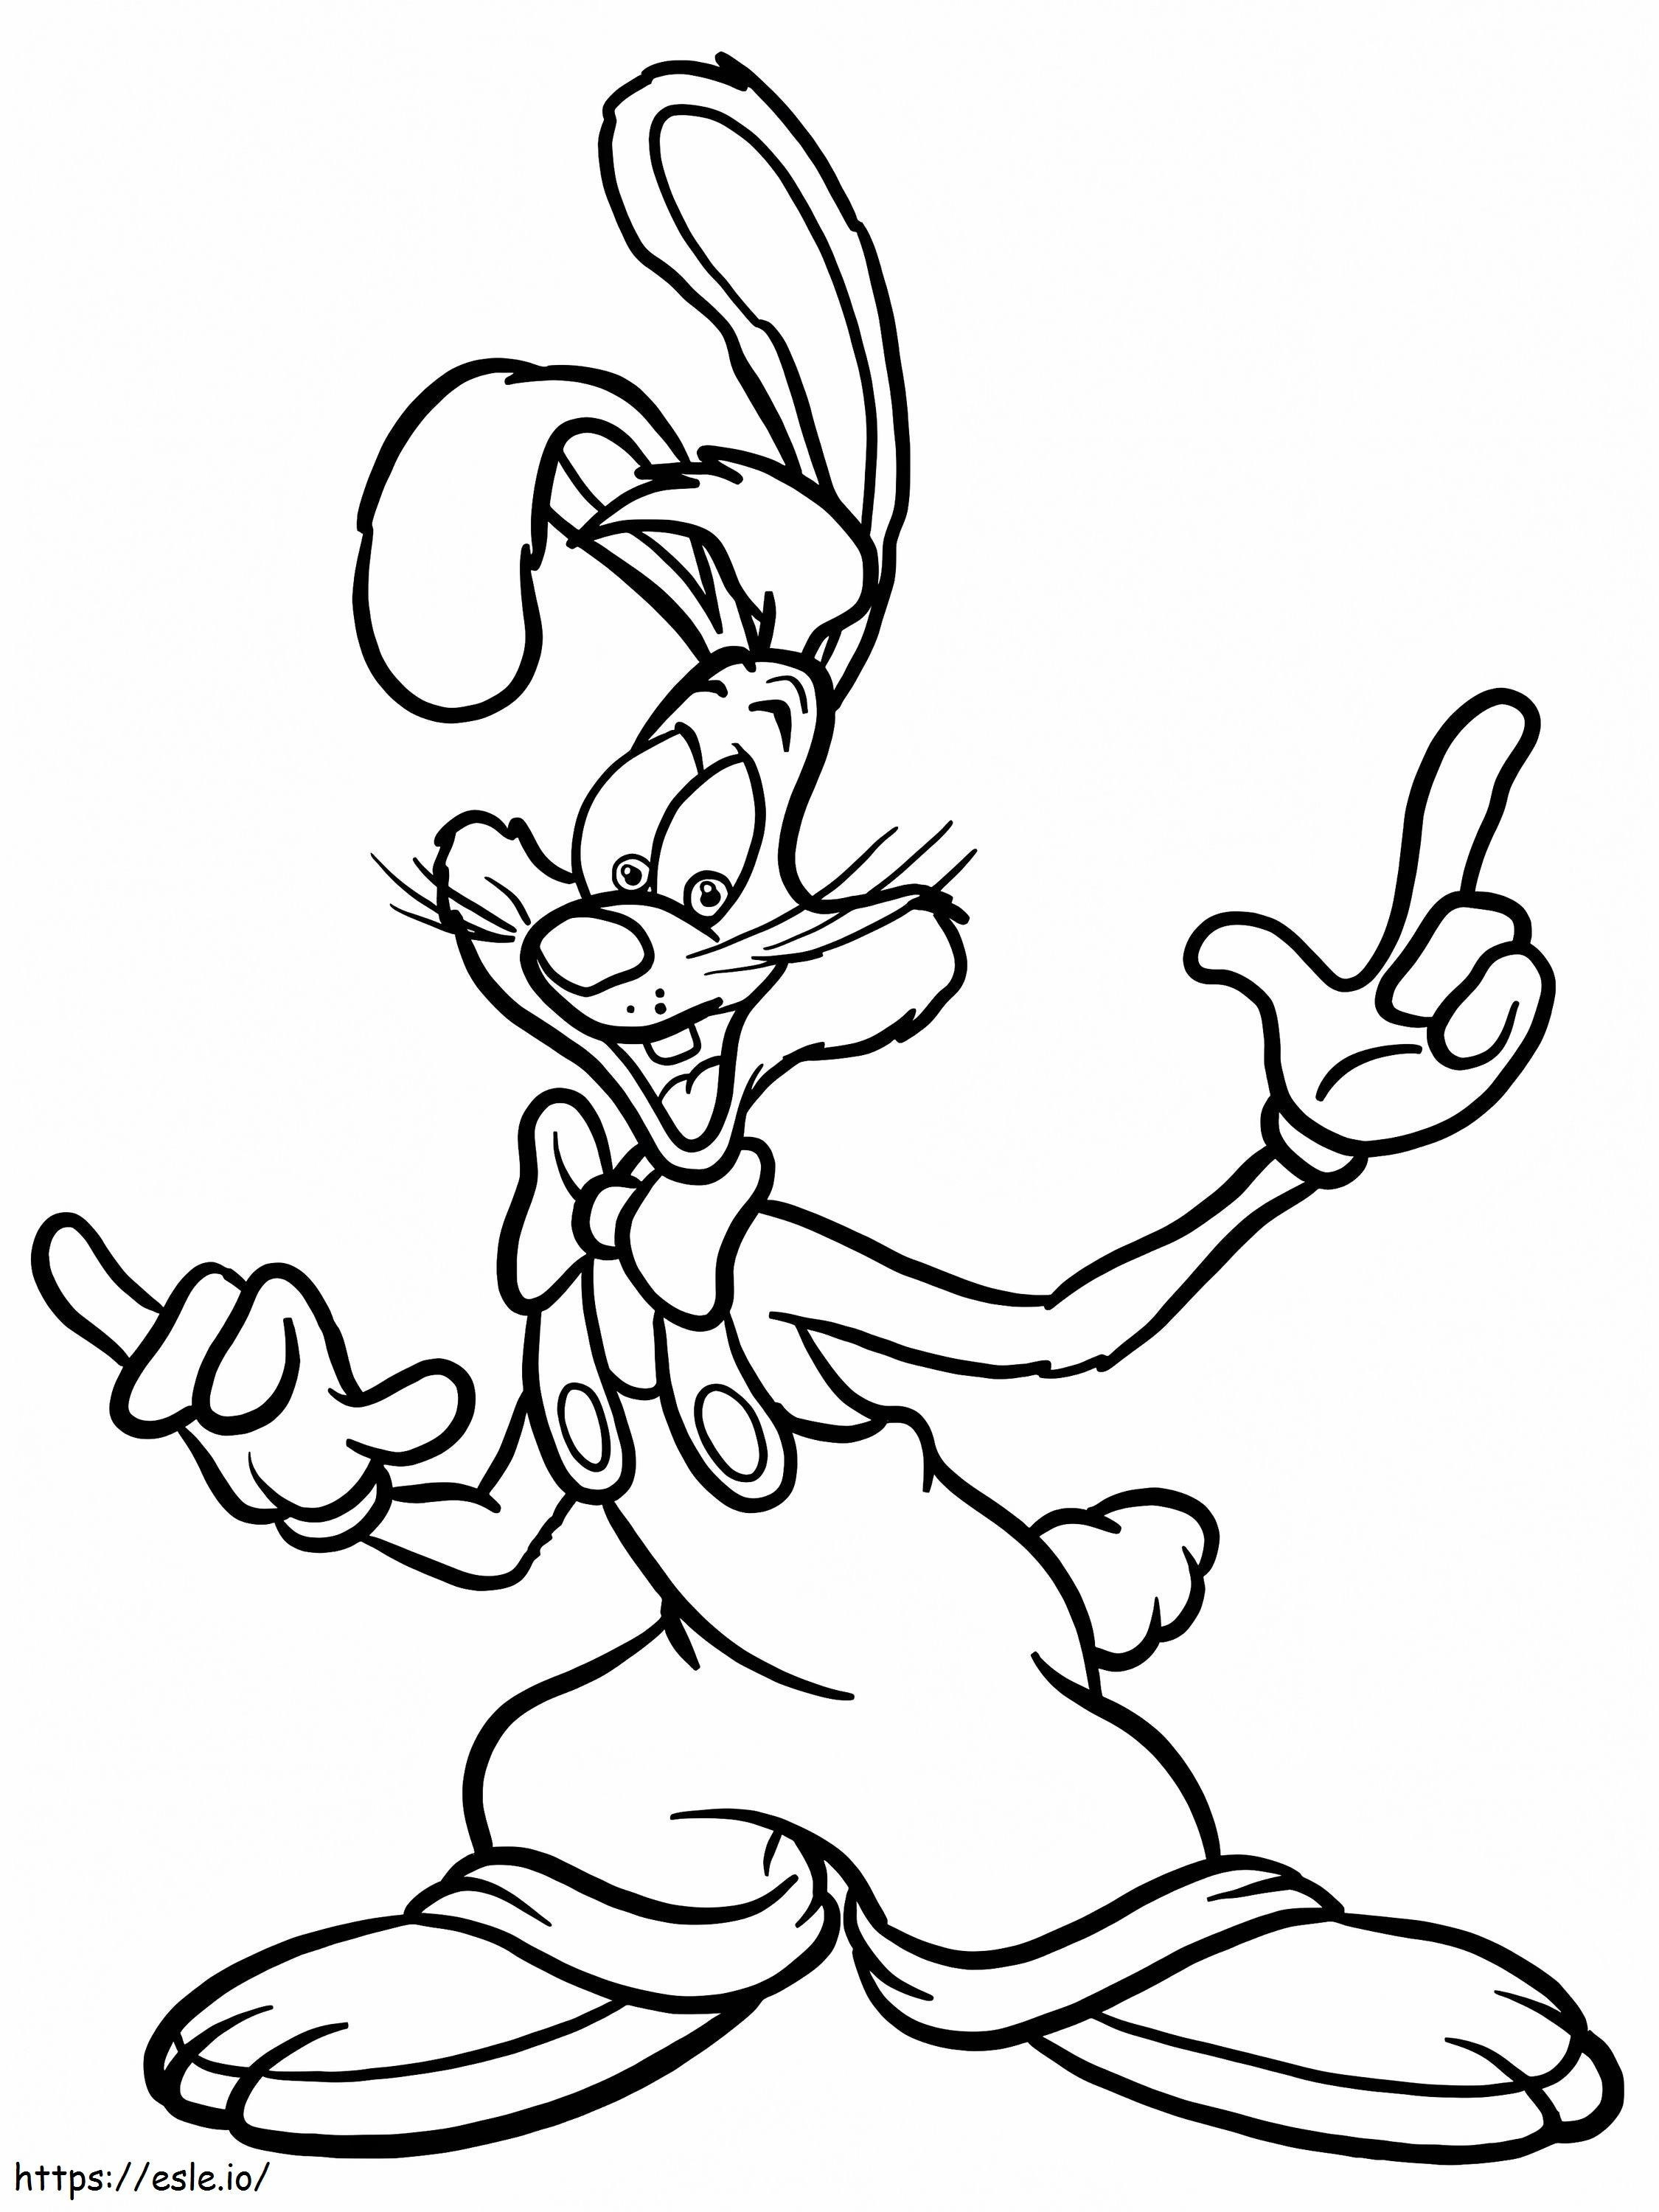 Coloriage Imprimer Roger Rabbit à imprimer dessin